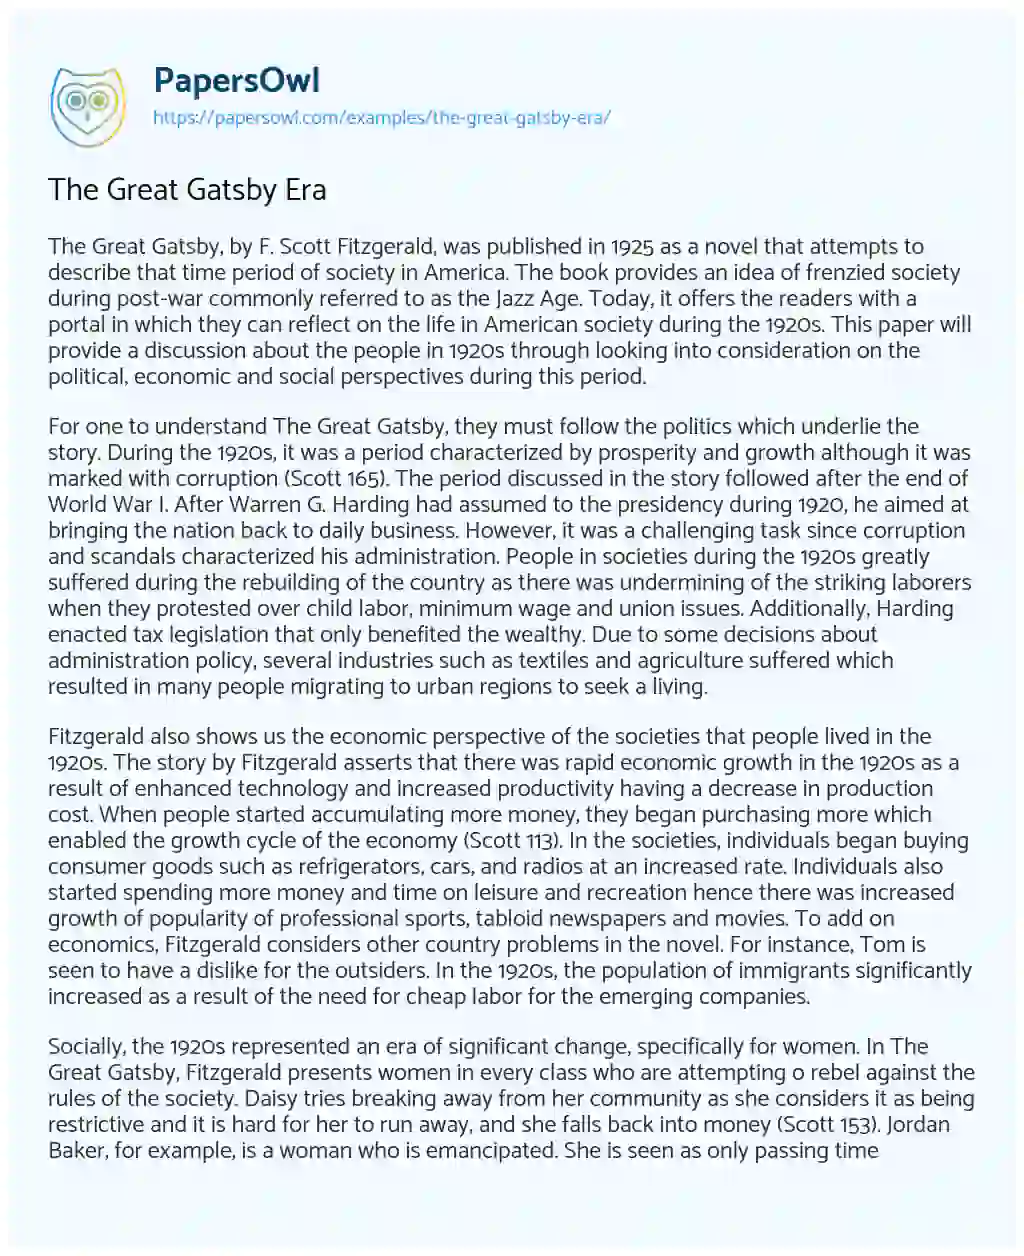 Essay on The Great Gatsby Era